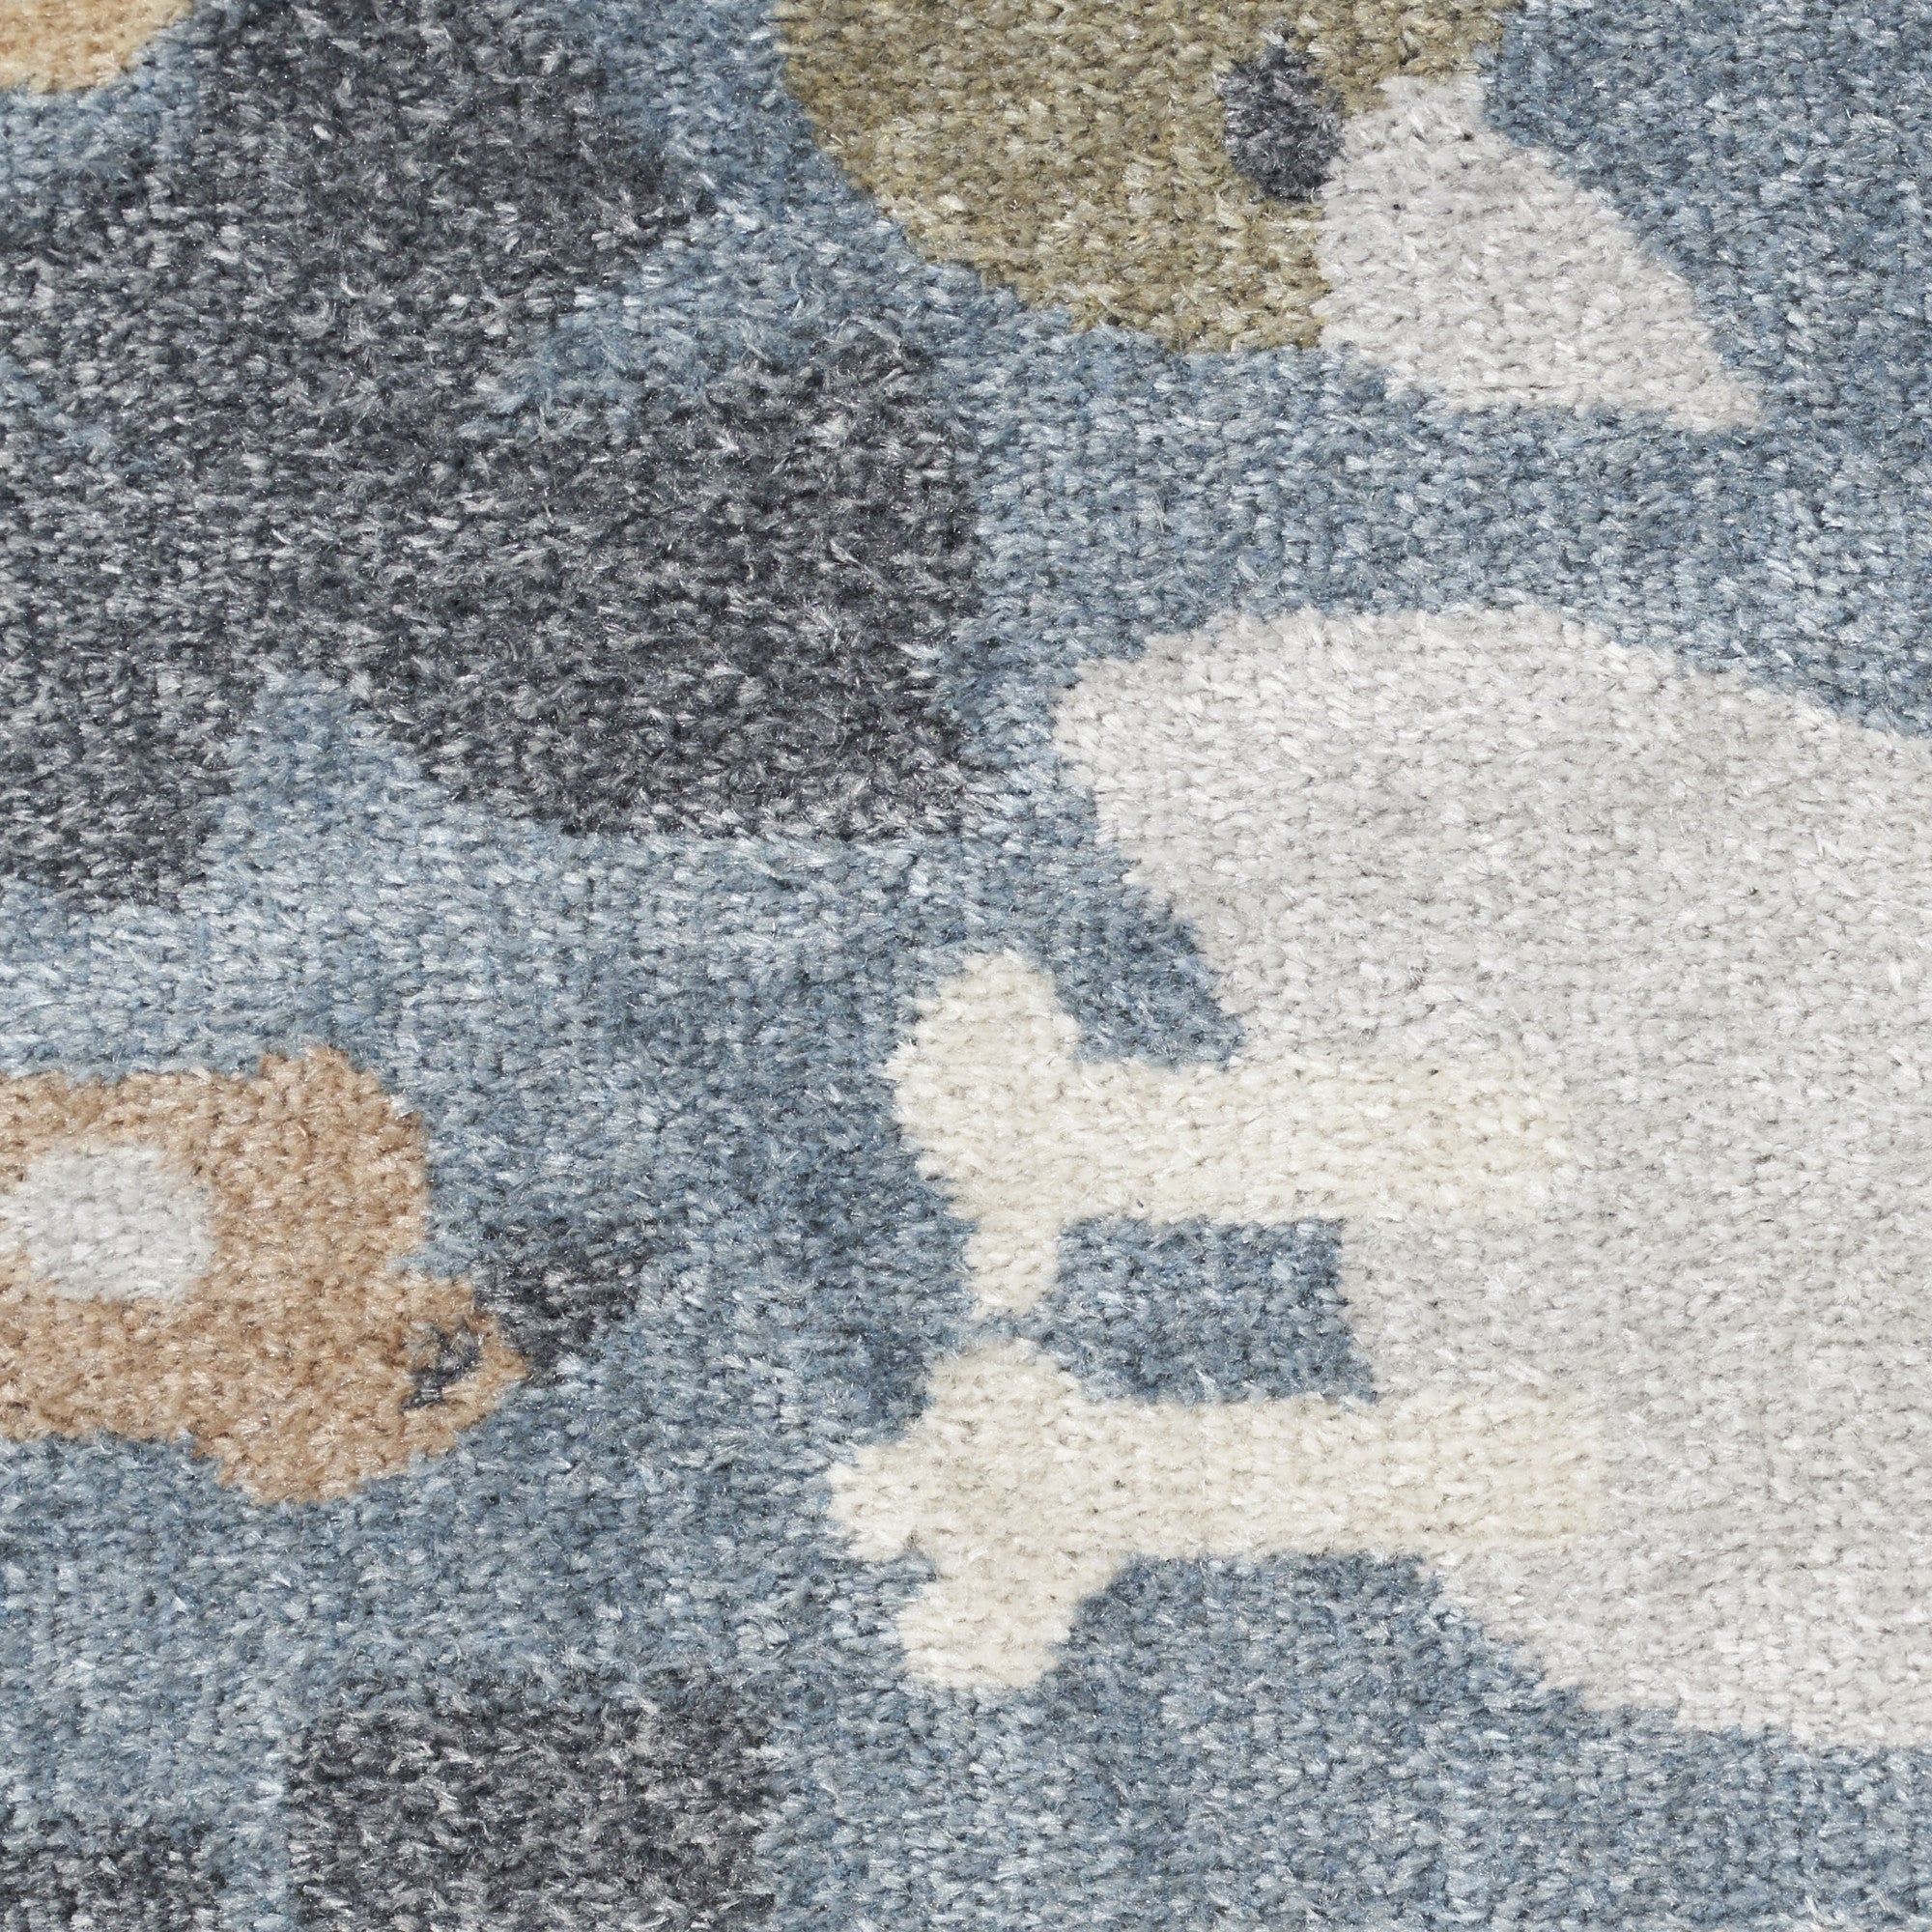 3' X 5' Ivory Blue and Gray Kids Safar Animal Print Washable Area Rug